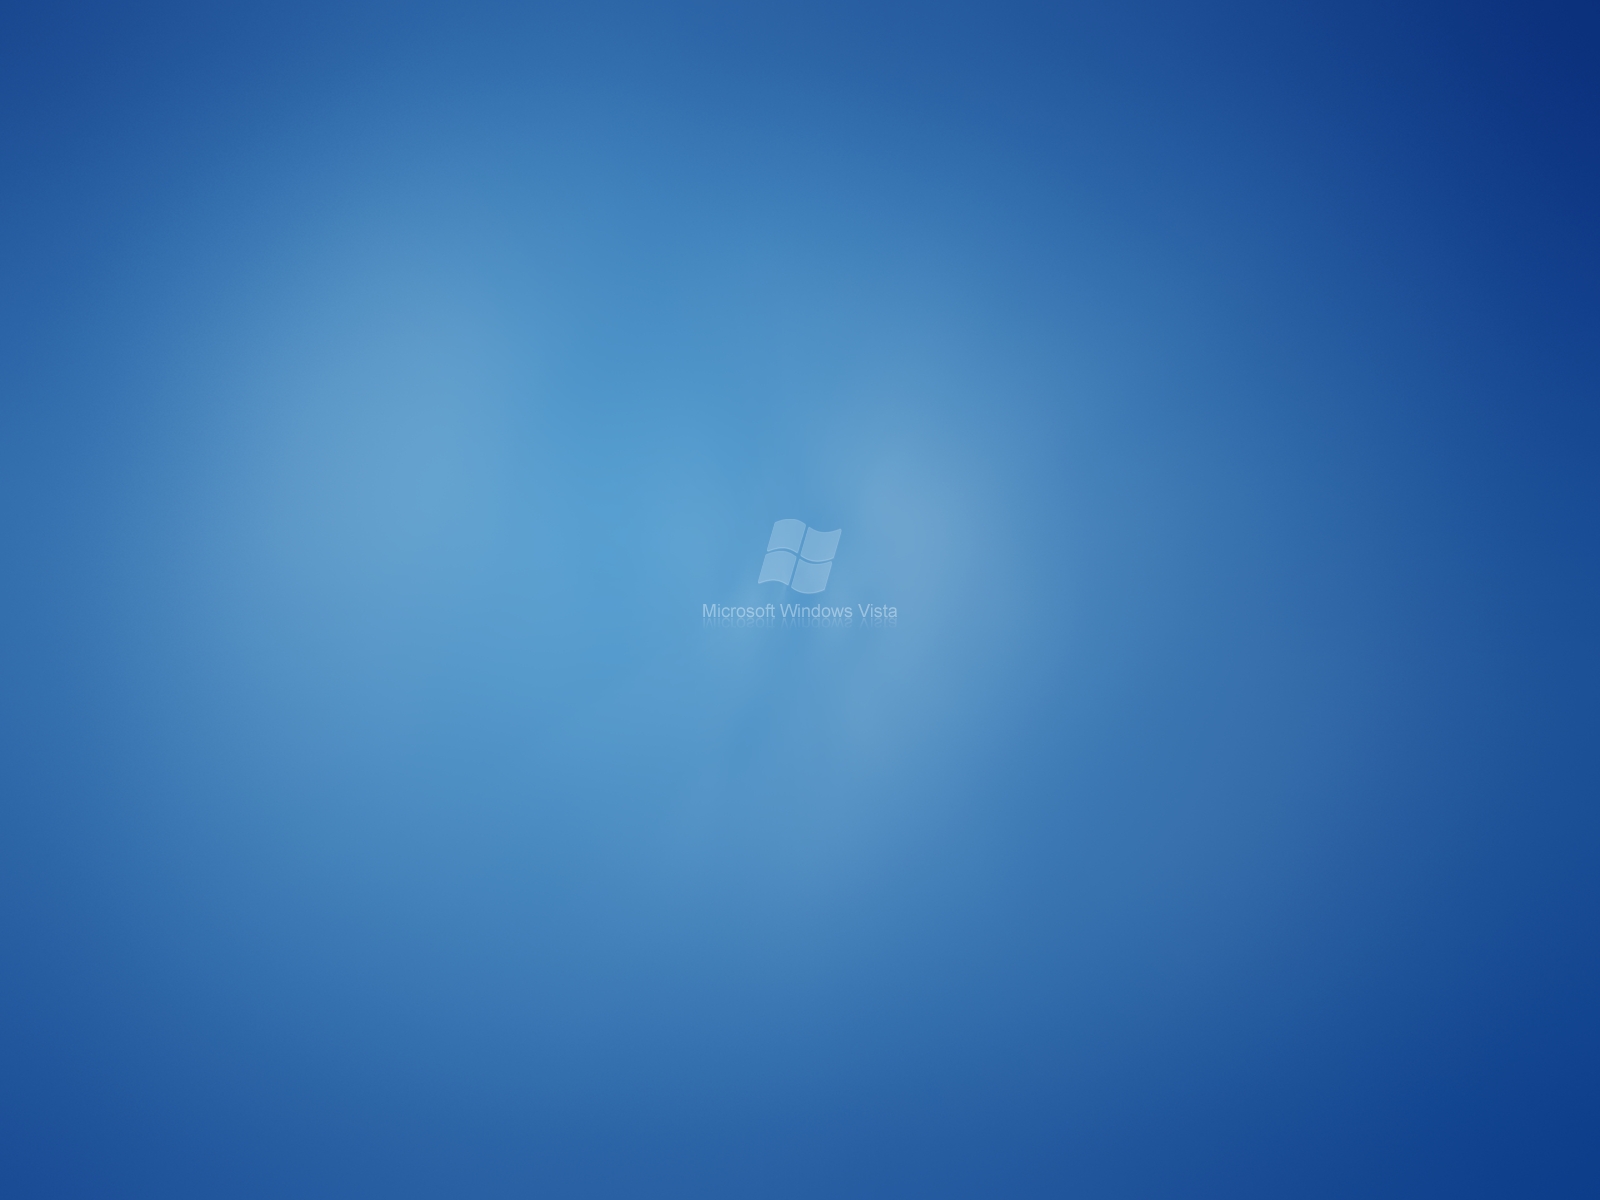 Microsoft Windows Wallpaper And Screensaver